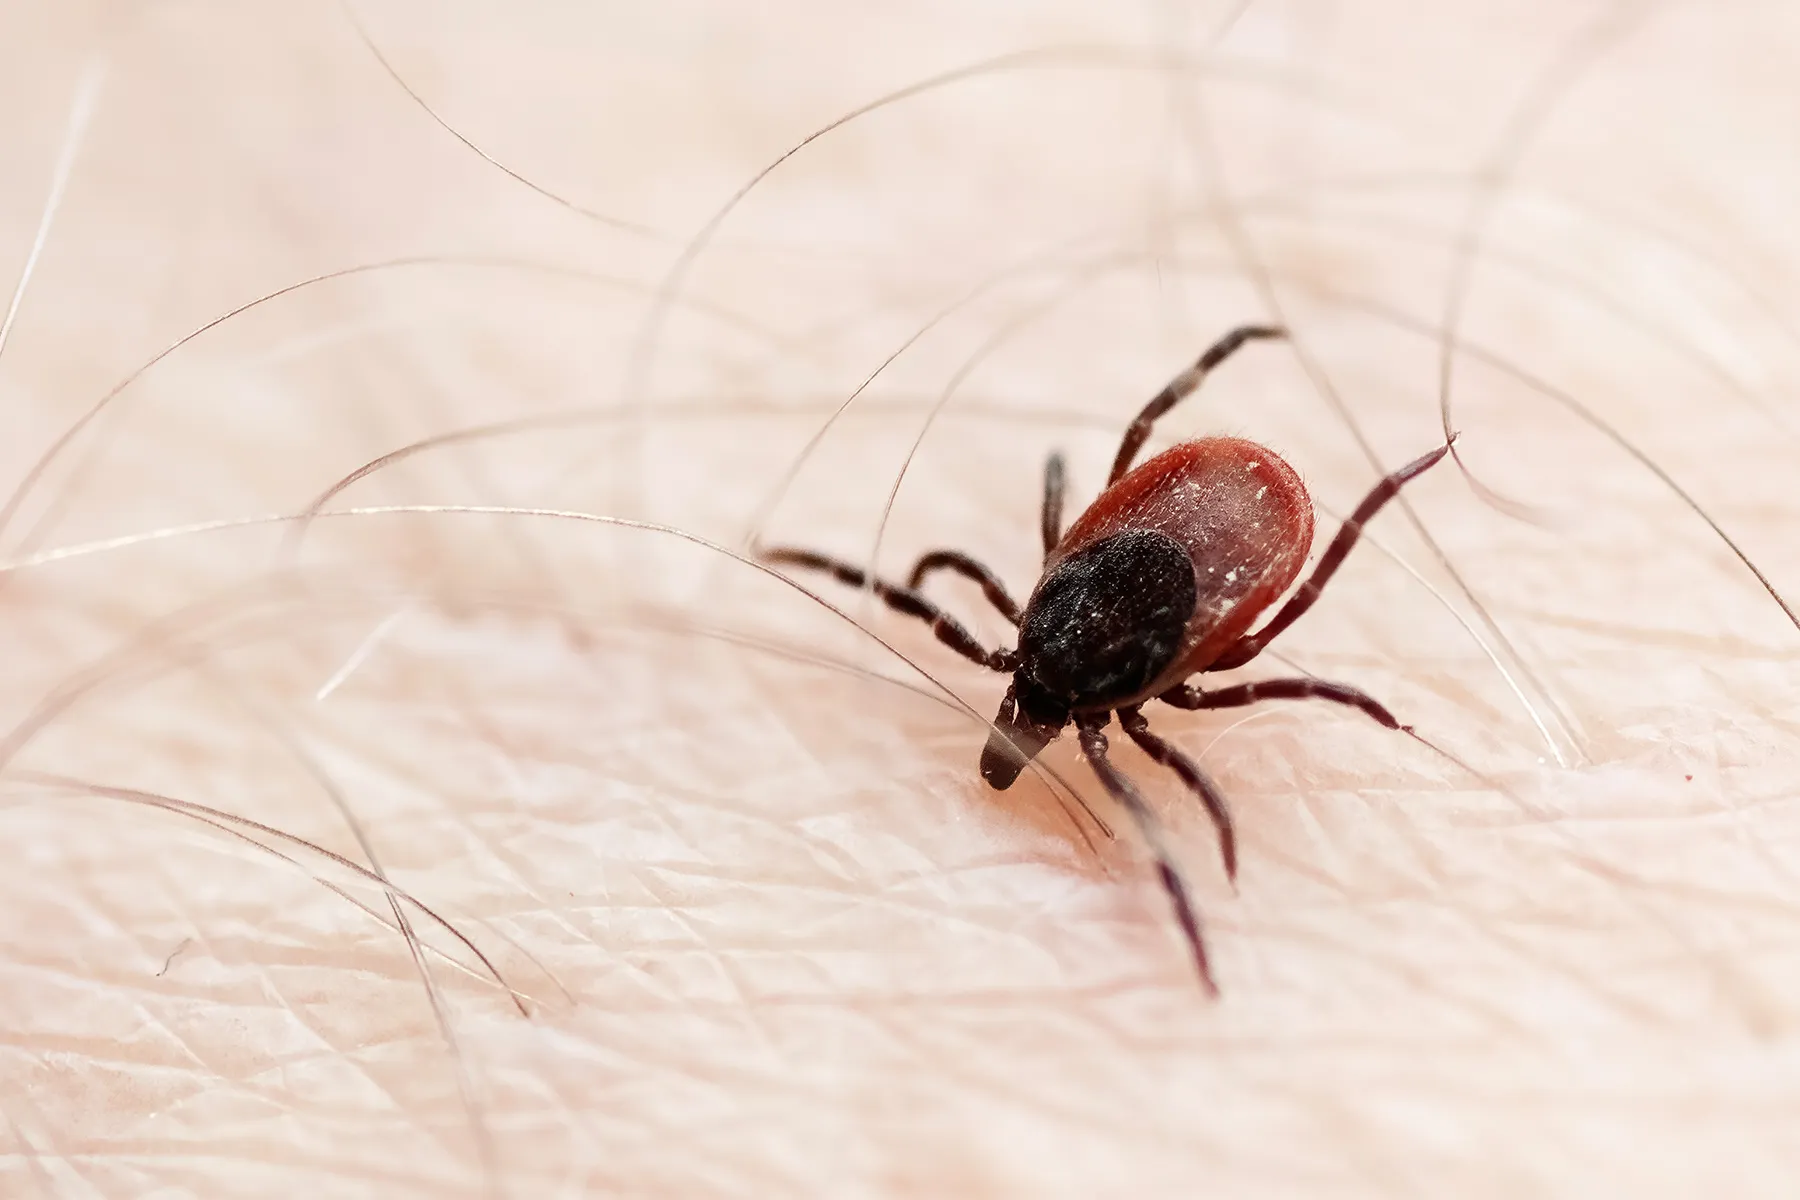 Targeting Ticks and Lyme Disease With Gene Editing